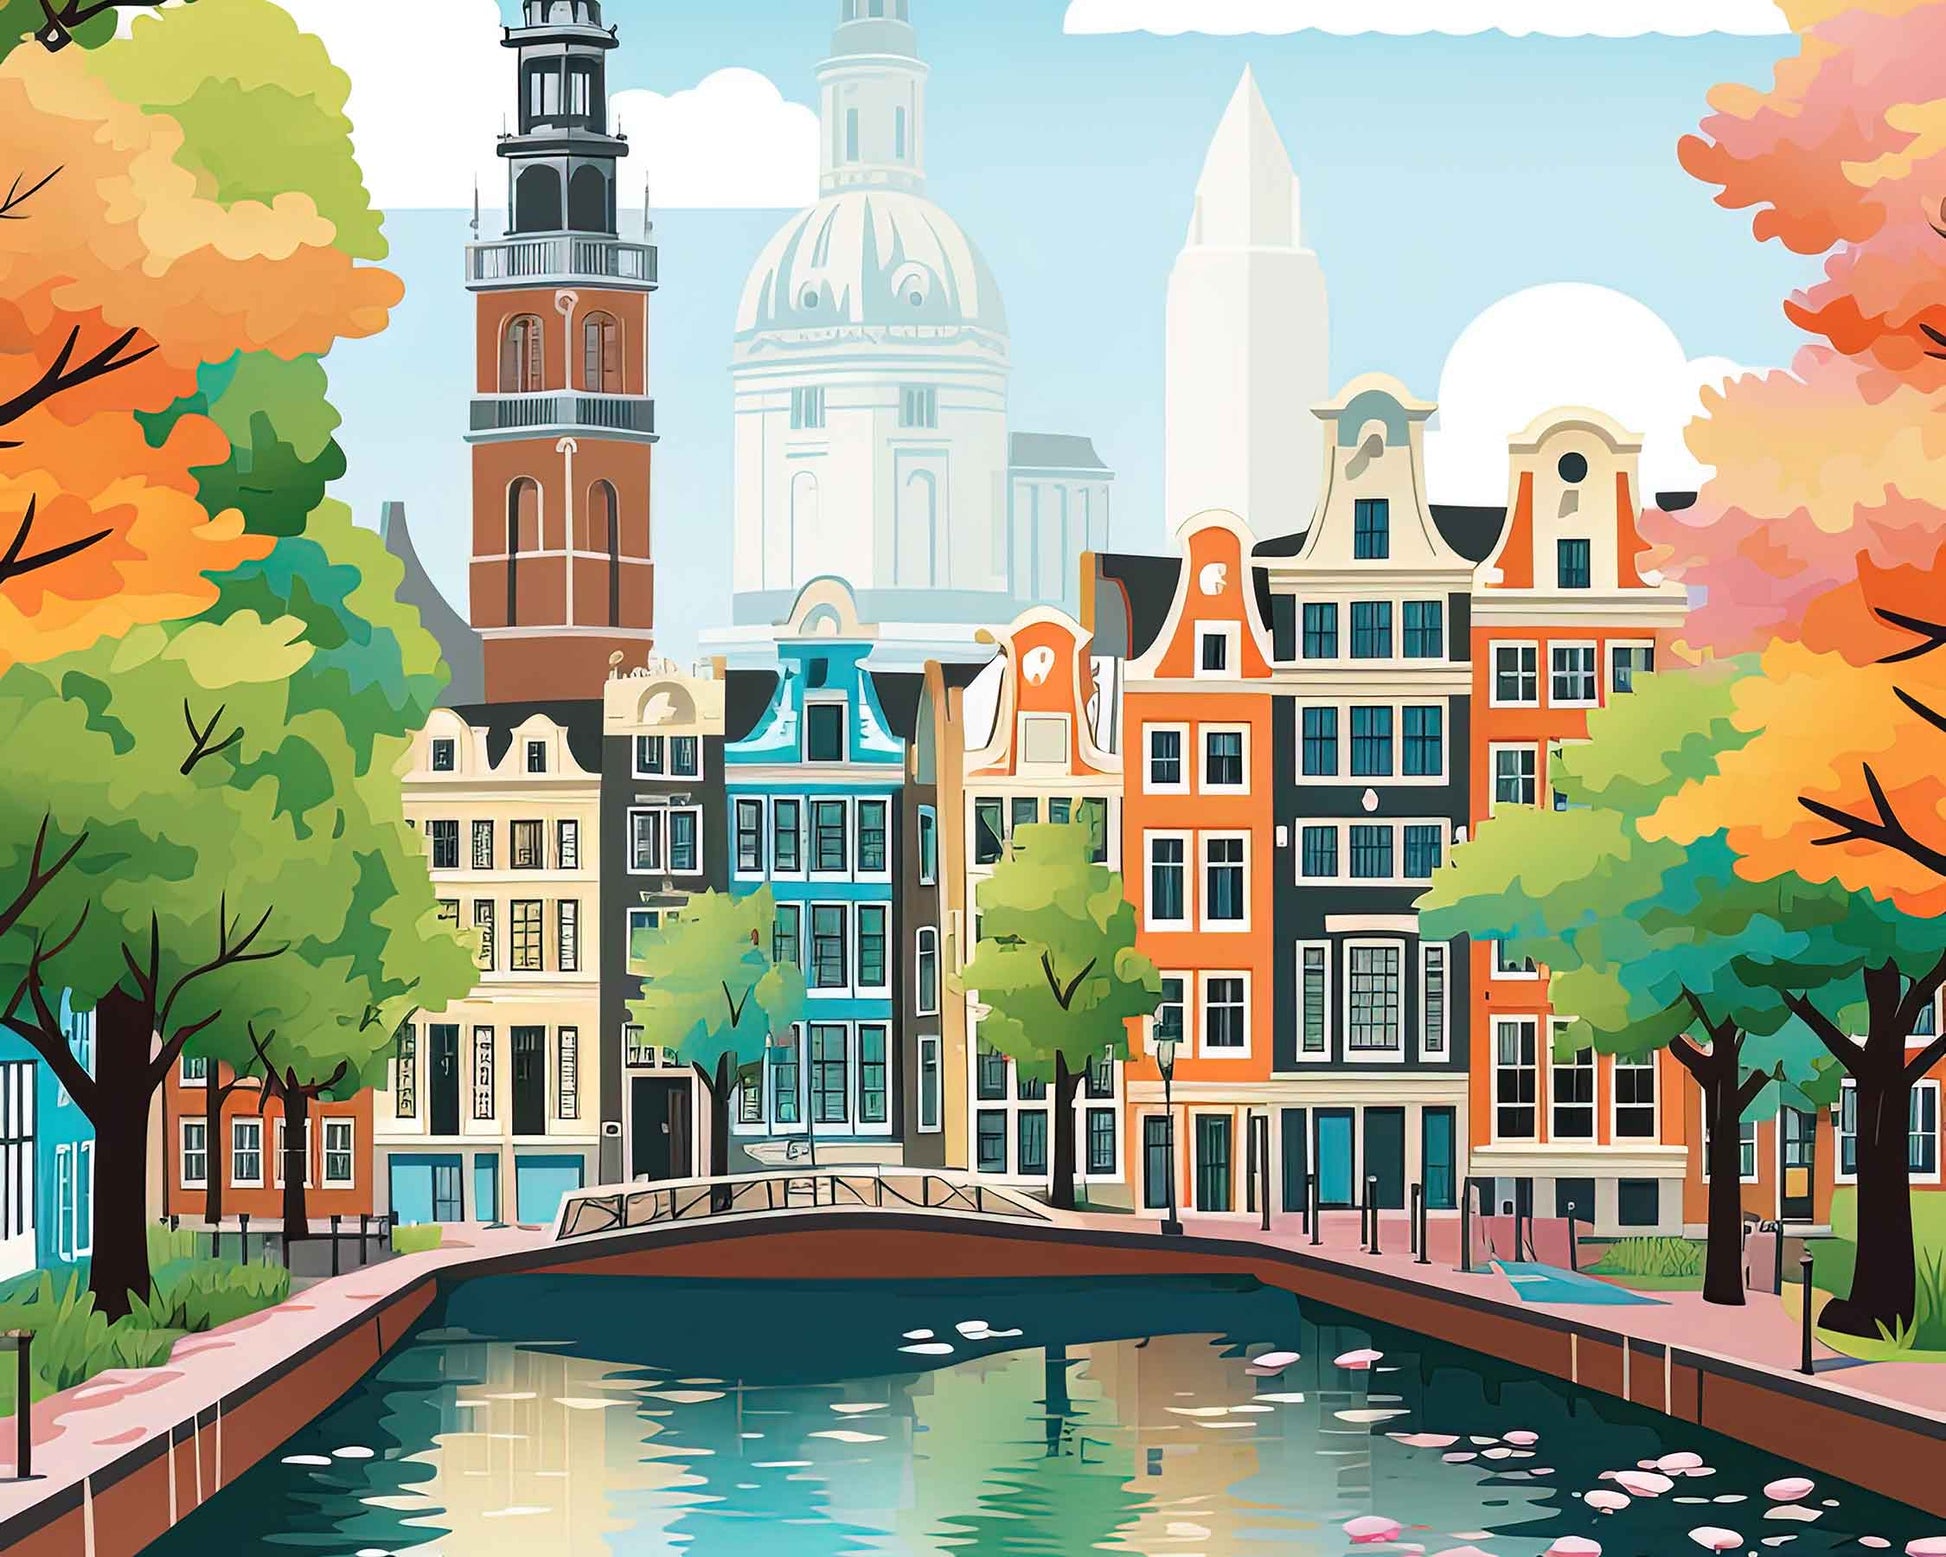 Framed Image of Amsterdam Holland Travel Poster Wall Art Print Illustration